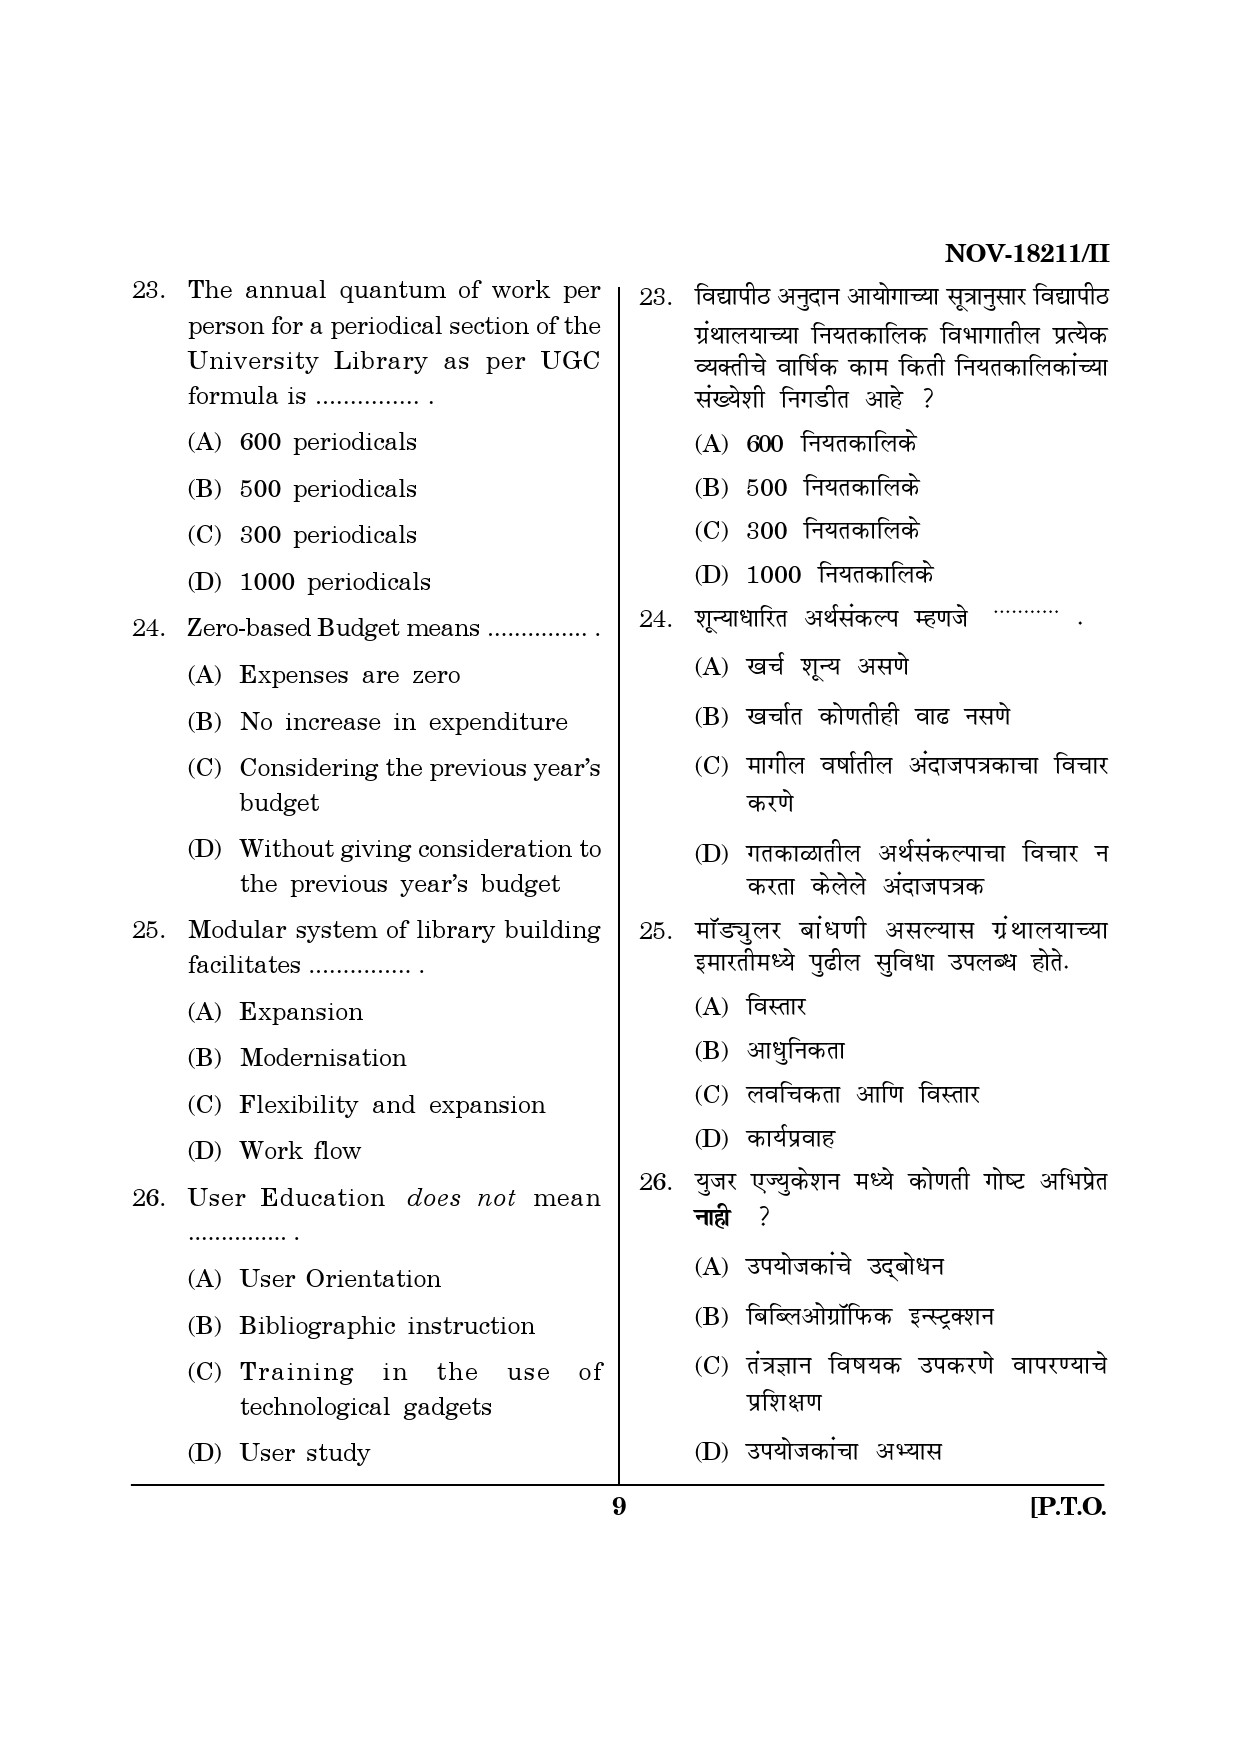 Maharashtra SET Library Information Science Question Paper II November 2011 9